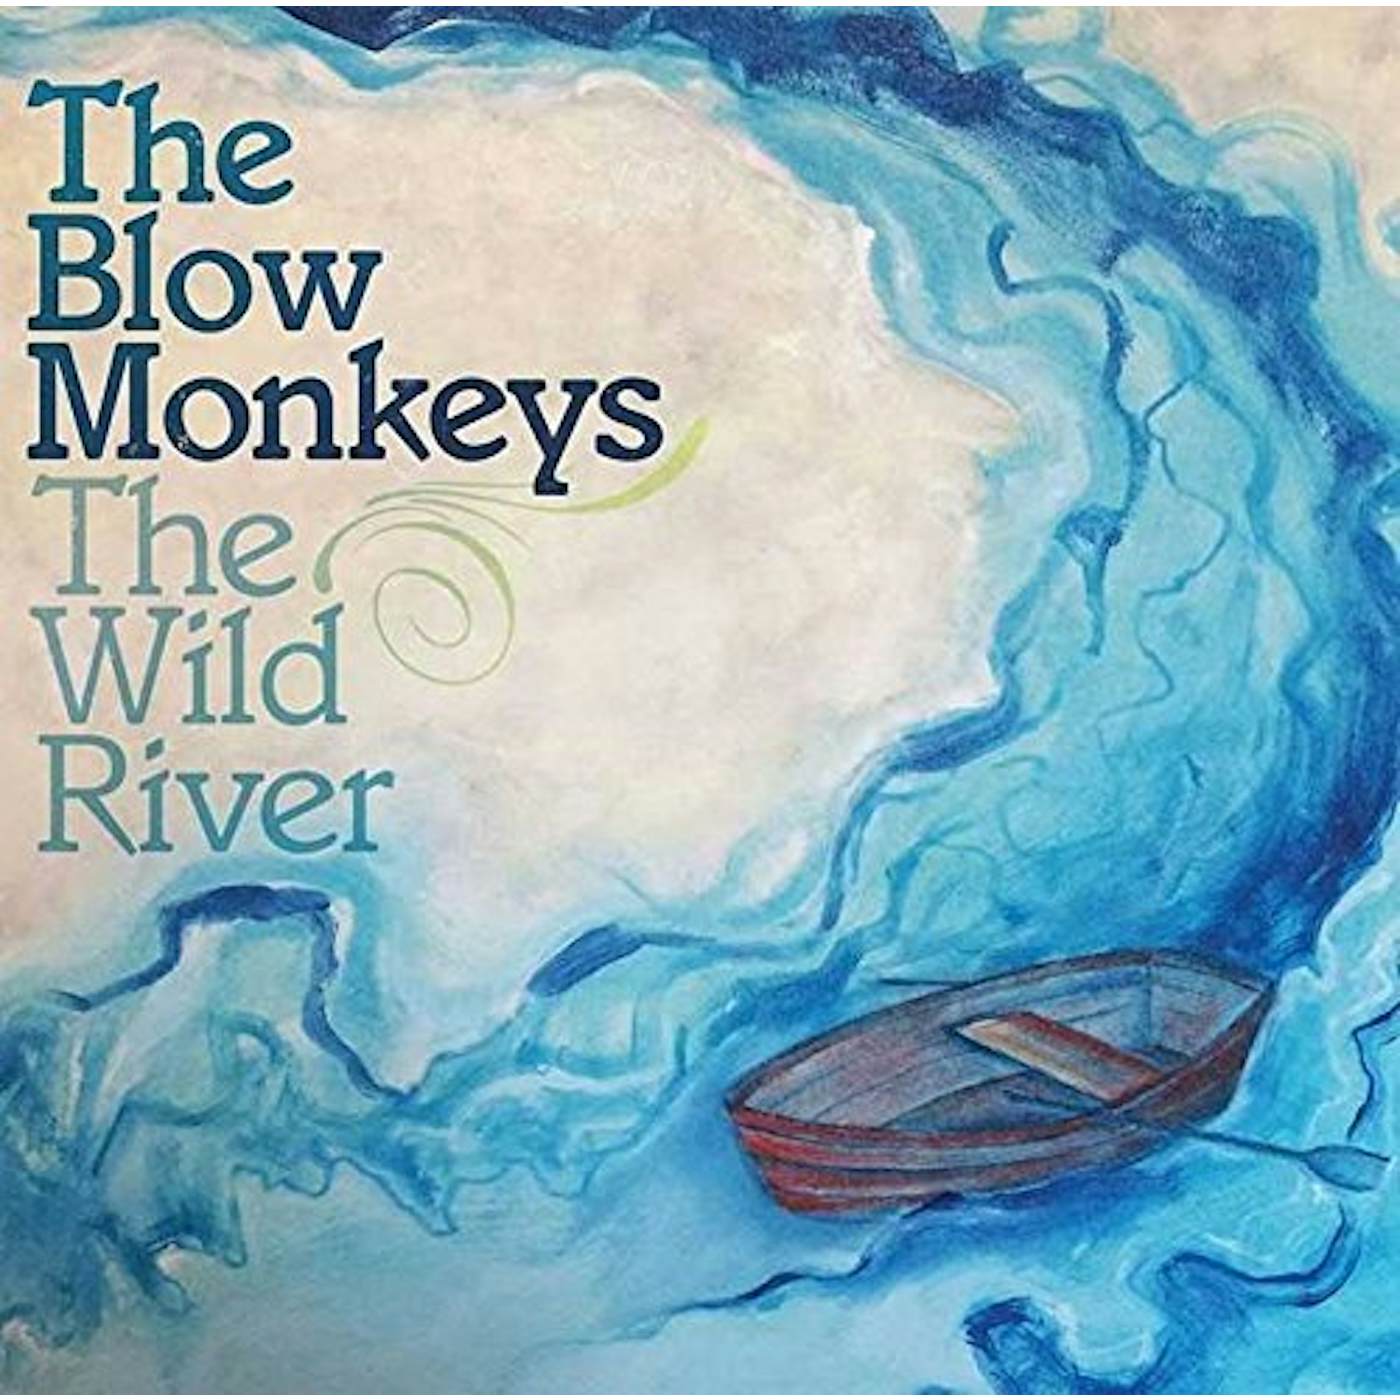 The Blow Monkeys WILD RIVER Vinyl Record - UK Release